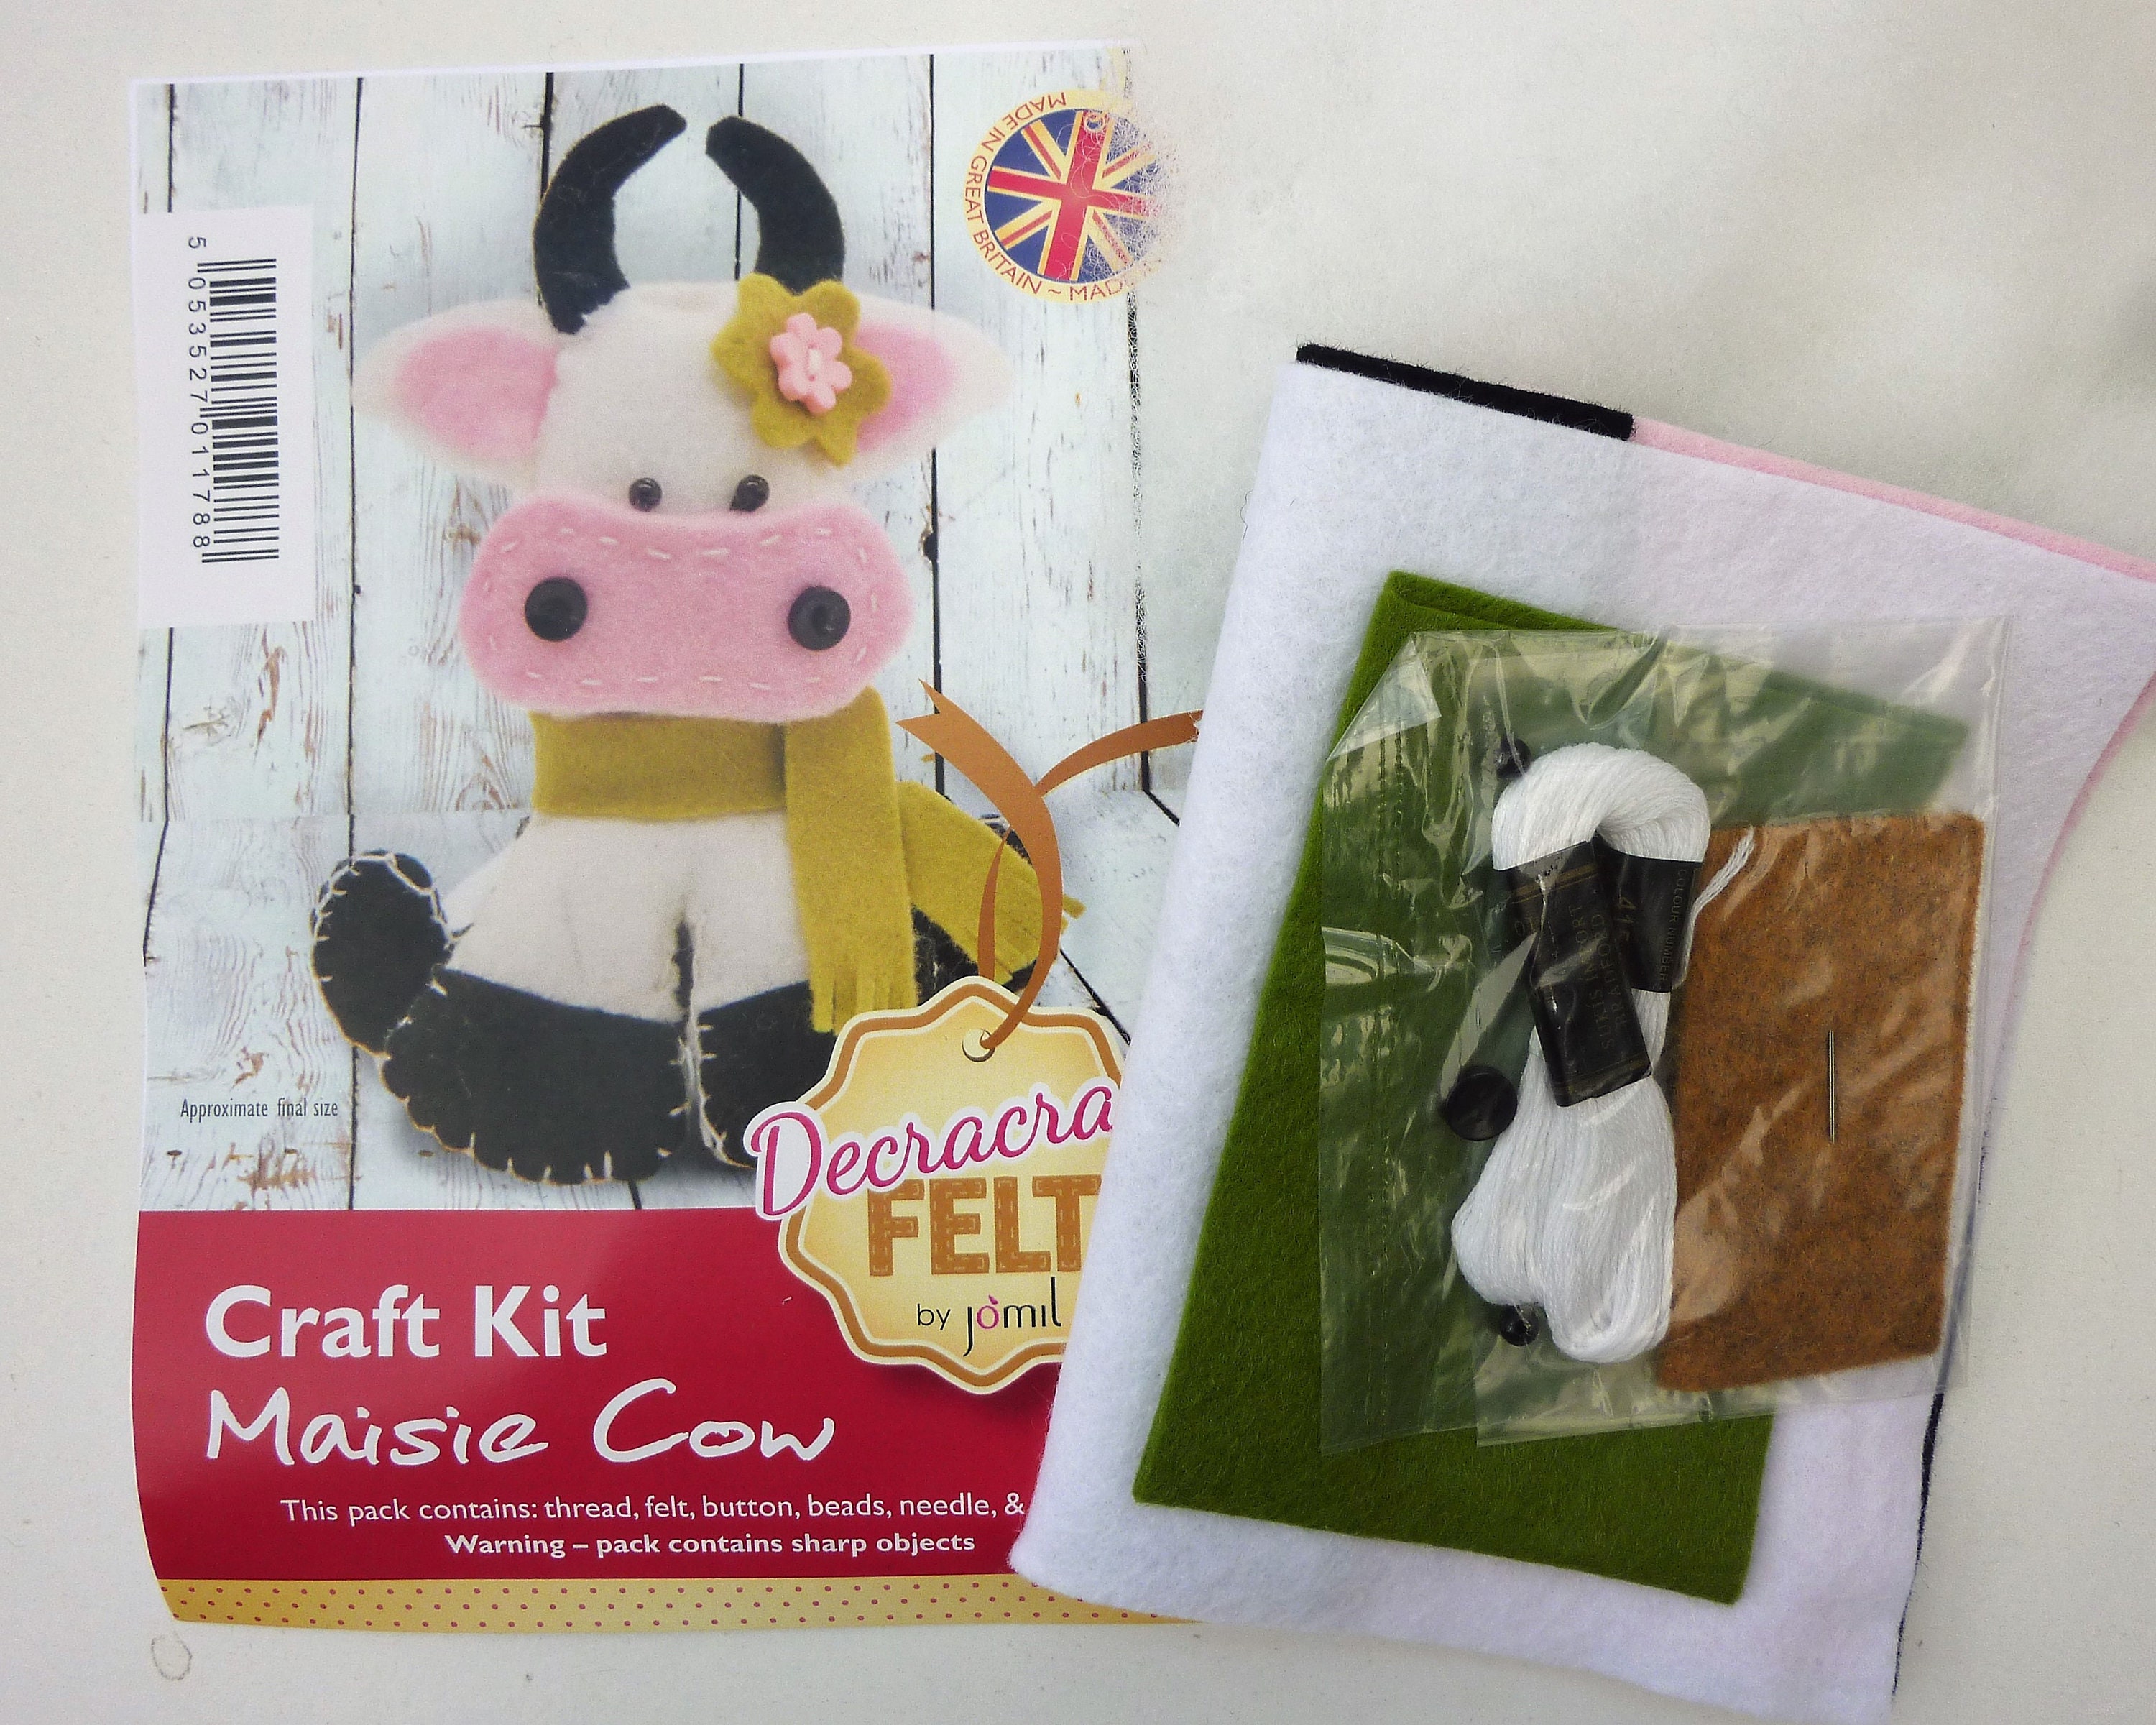 1 kesoto Felt Applique Kits for Adults with Gift Box DIY Animals Needle Felting Craft 